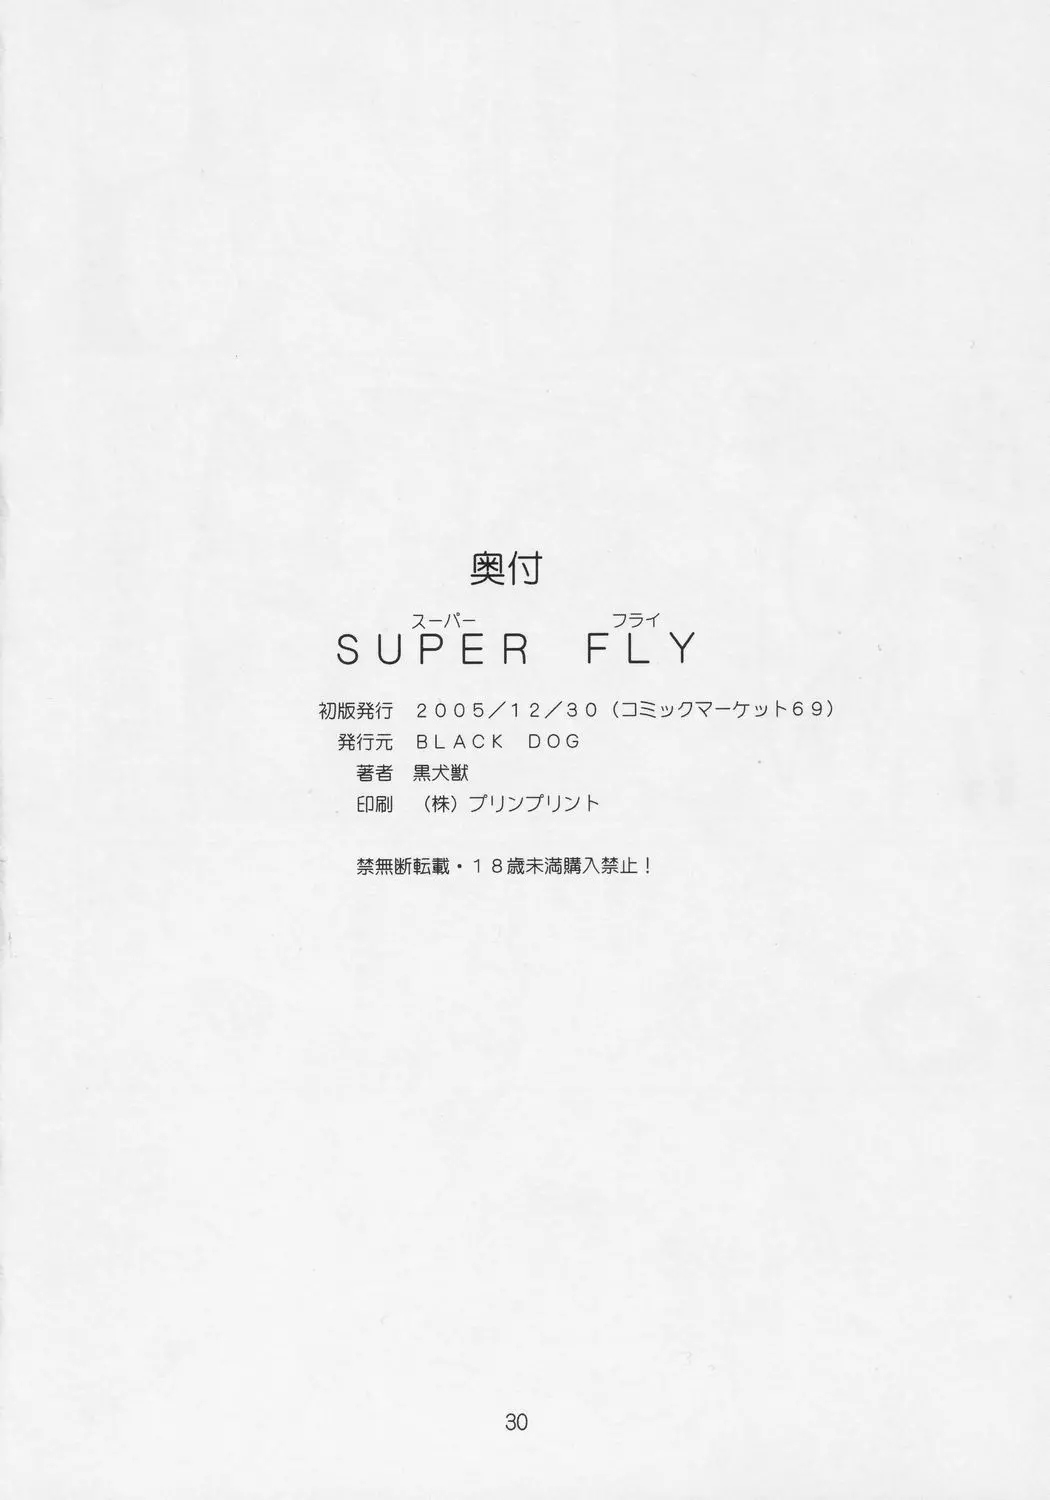 Super Fly - Foto 29